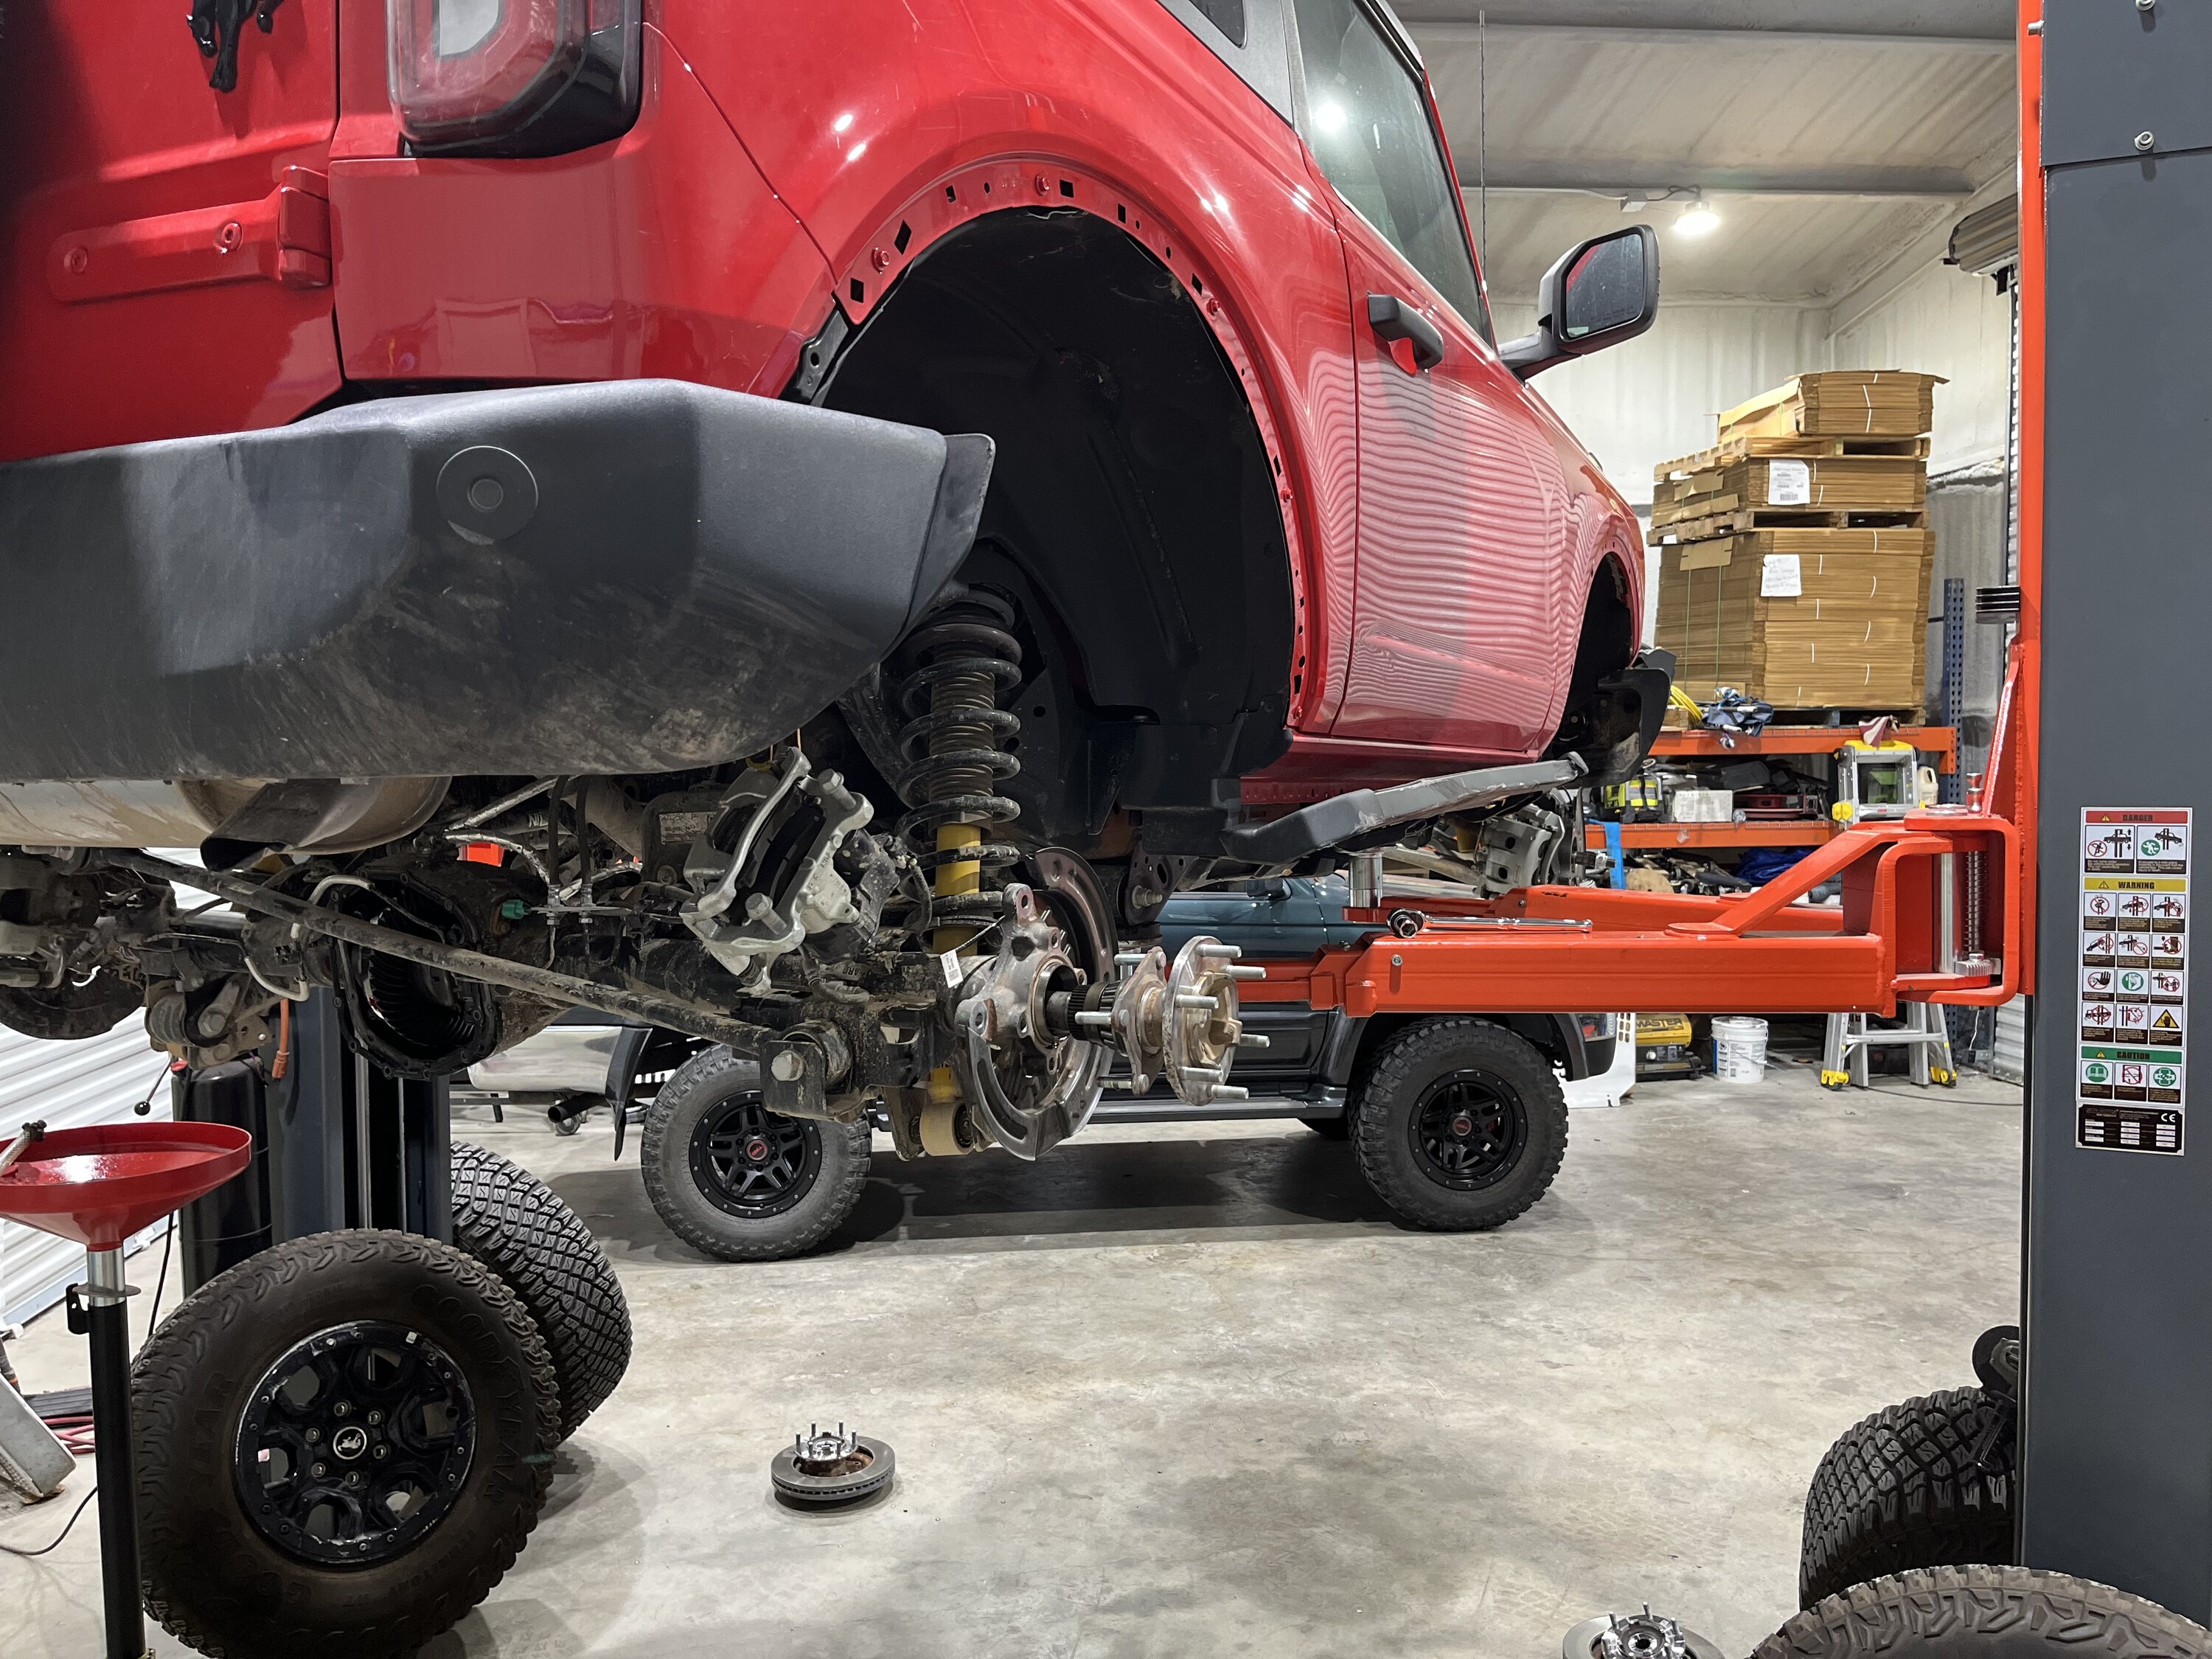 Ford Bronco 2 Door Race red Wildtrak build.  Custom FAB and CNC machining! BAD271D0-67B9-4CE3-8CB1-EB173EAAAEB9